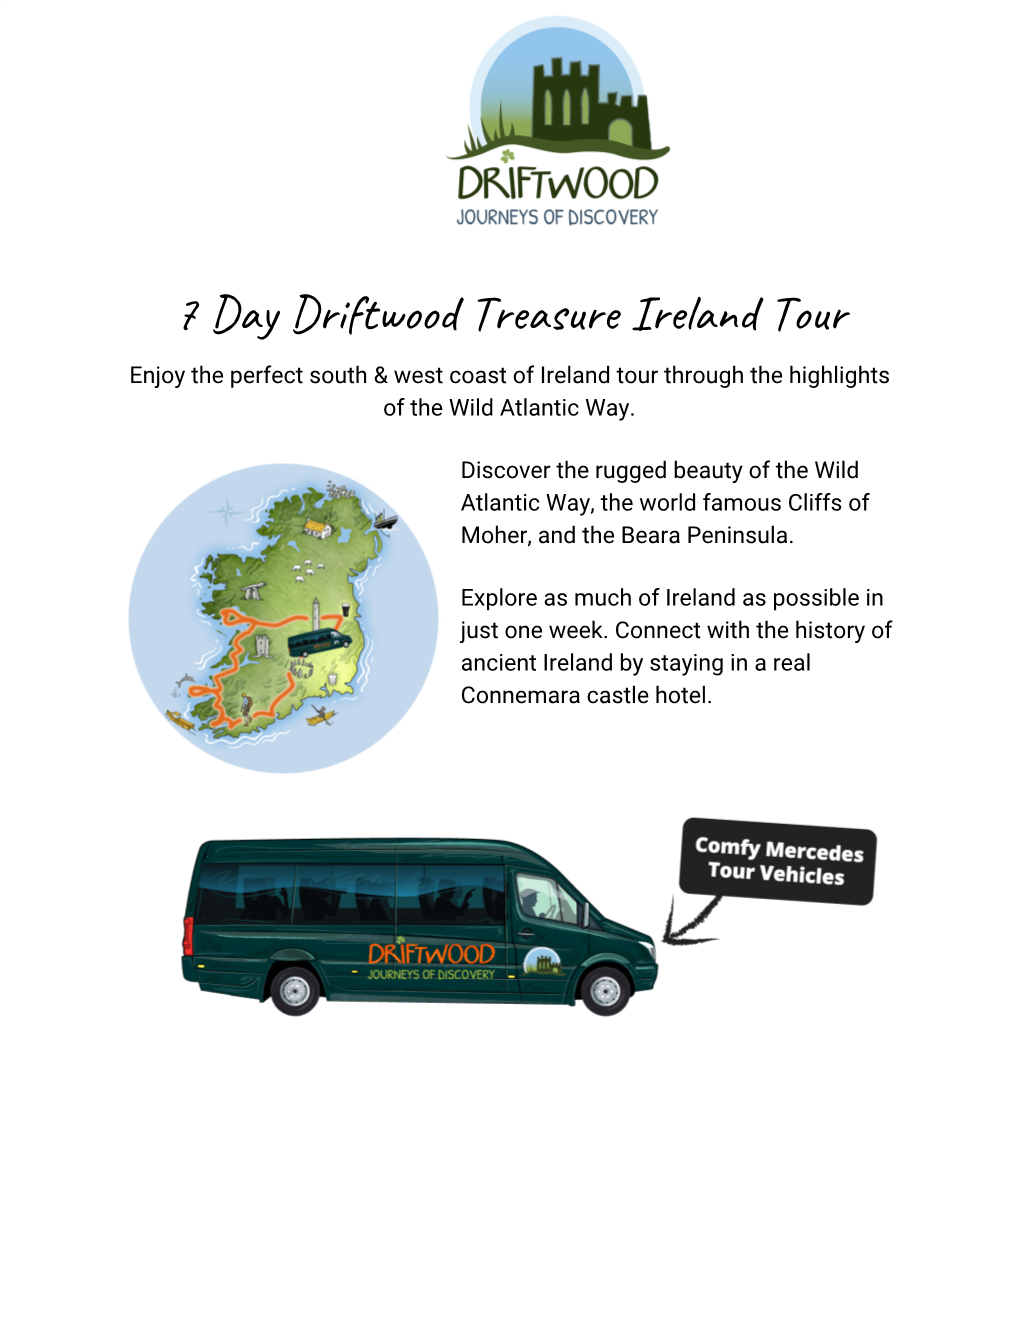 Read the 7 Day Driftwood Treasure Ireland Tour Itinerary